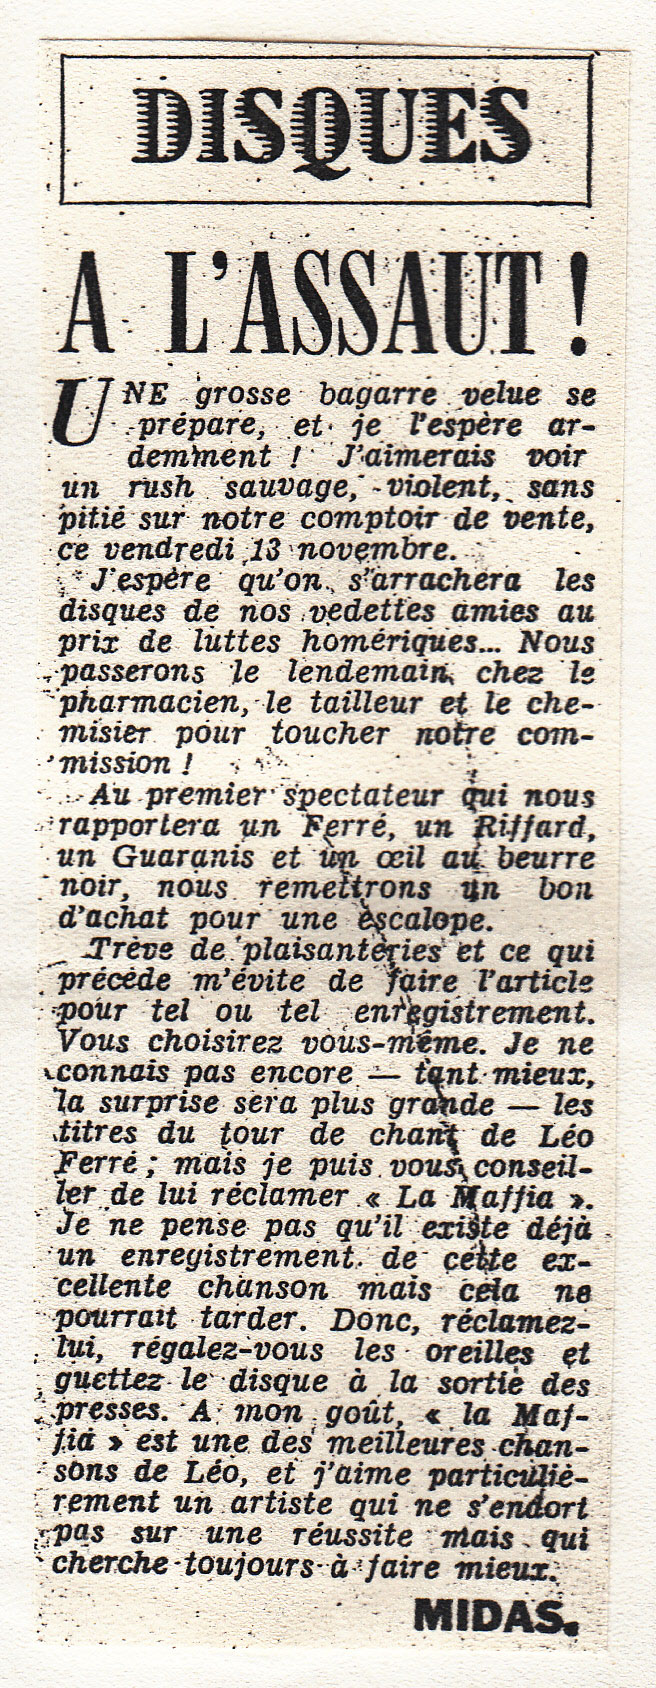 Léo Ferré, Le Monde Libertaire de novembre 1959